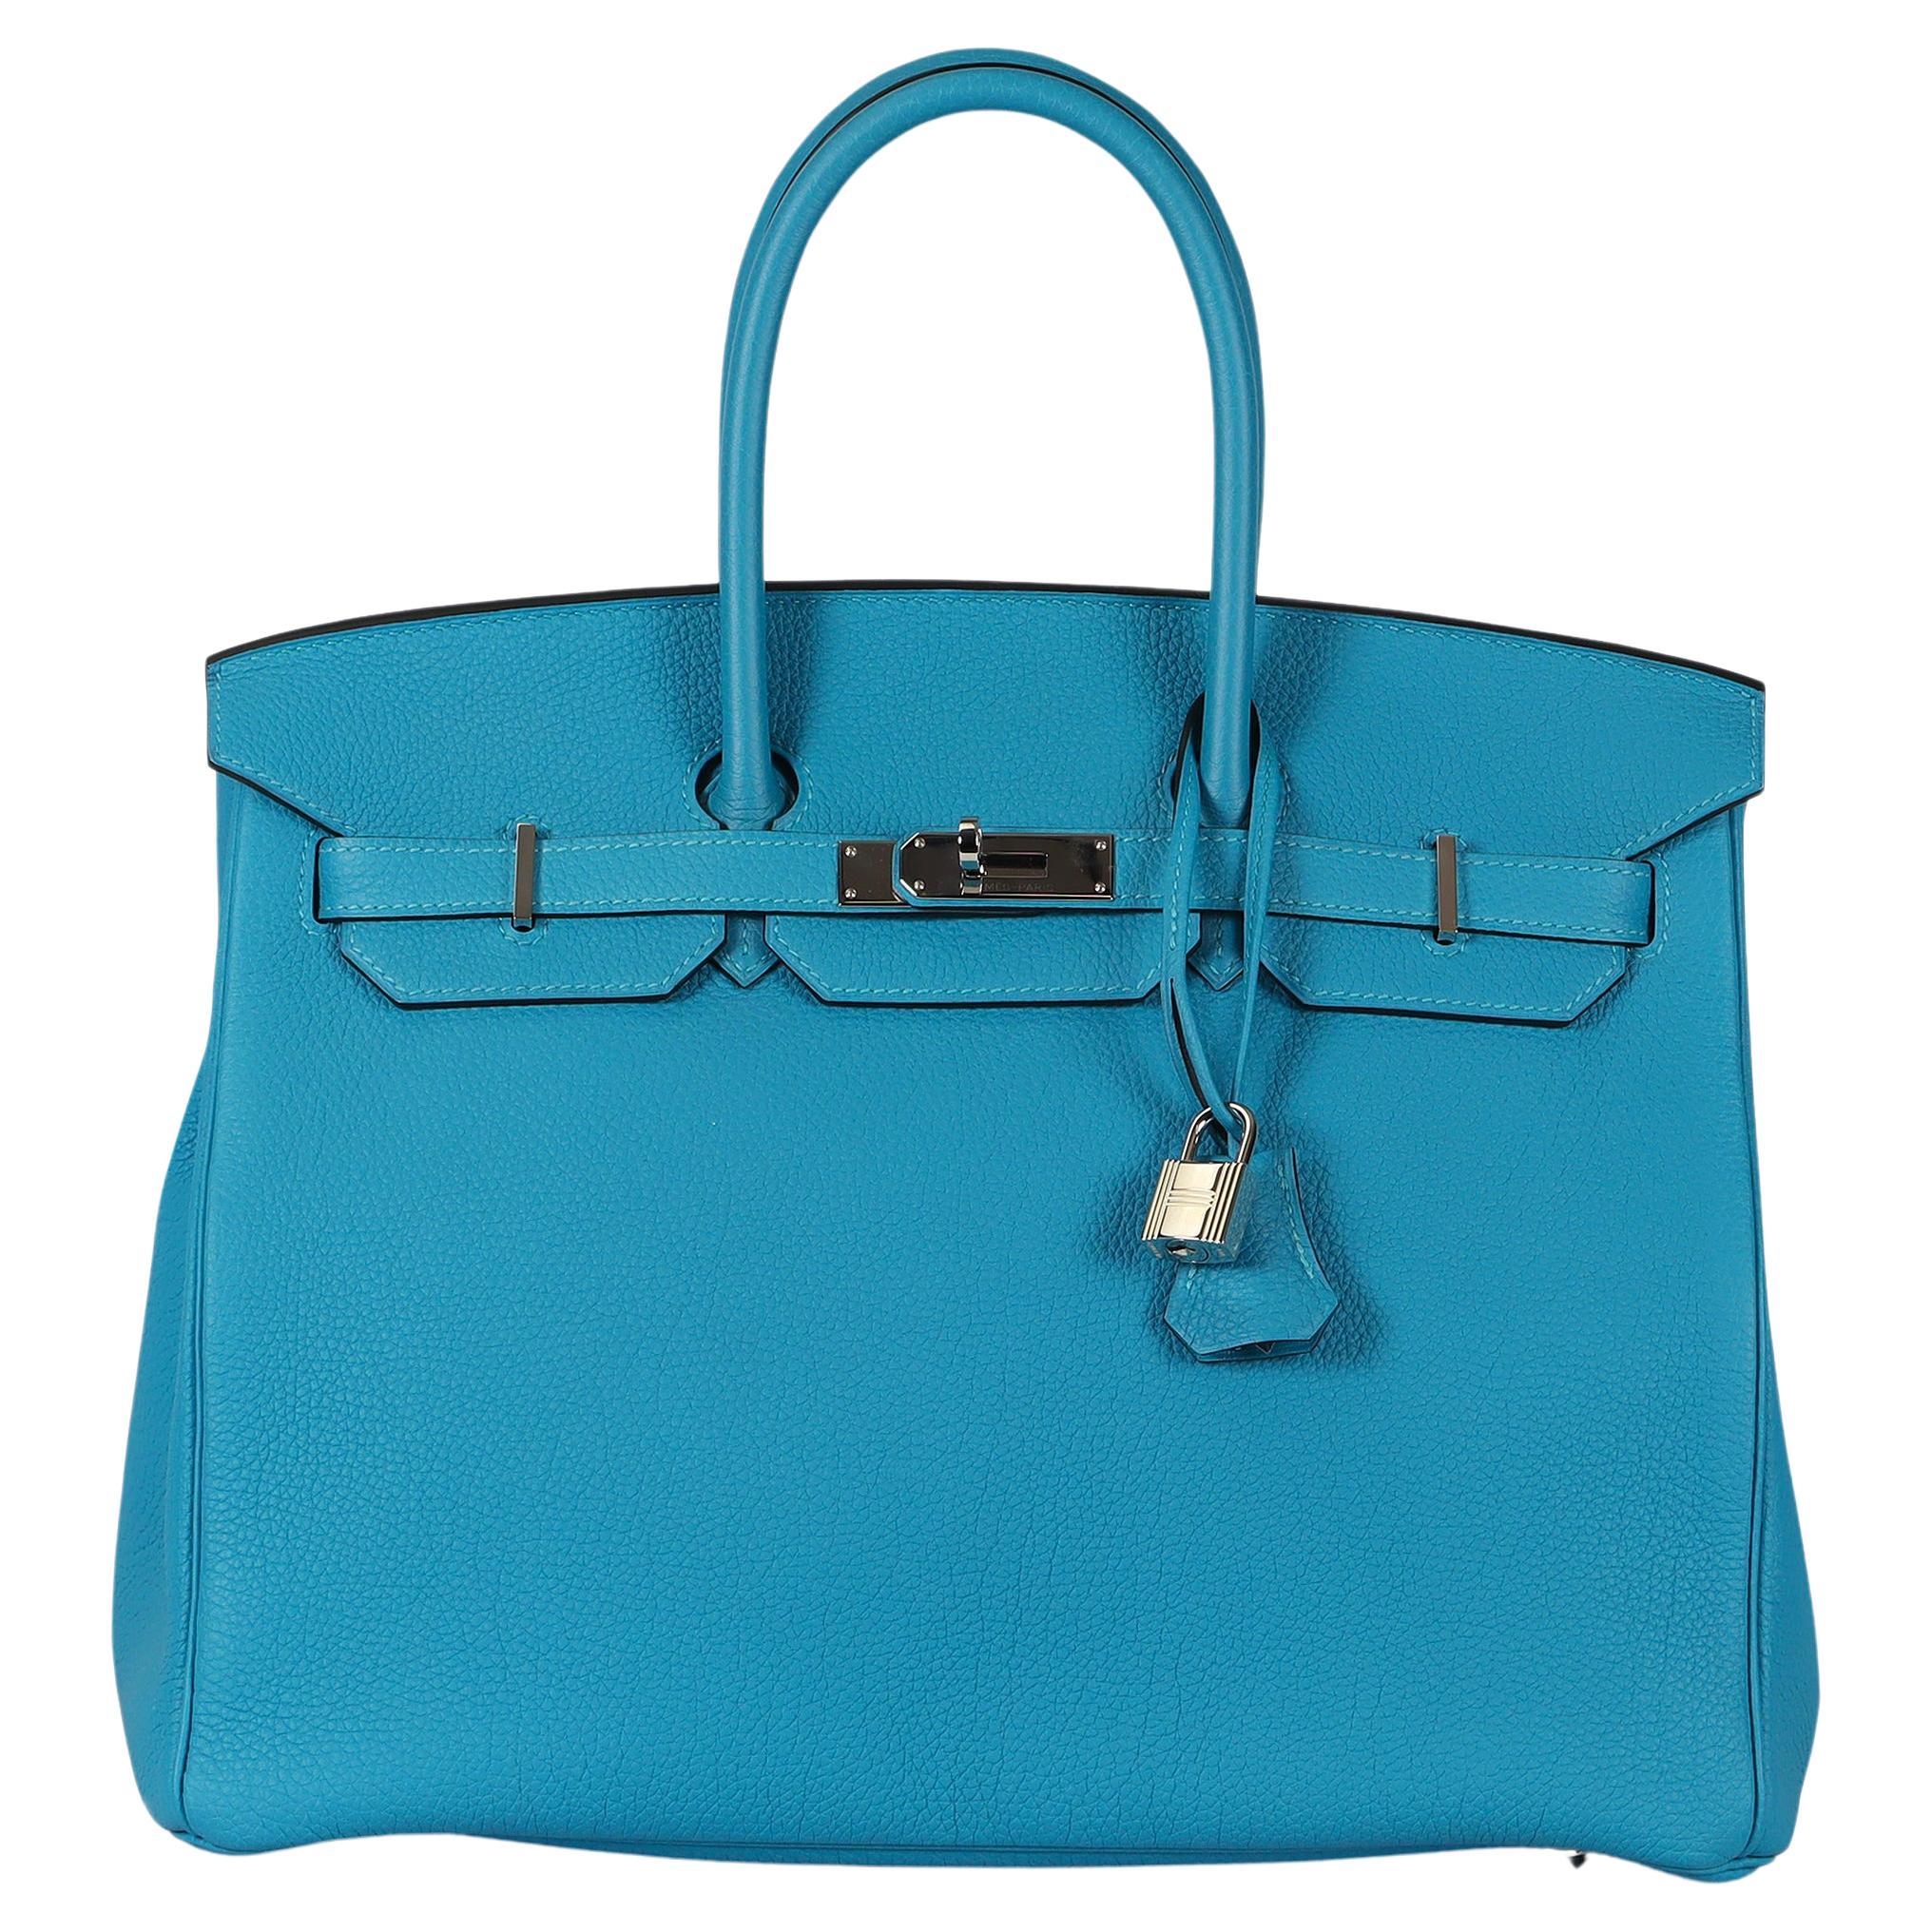 Hermès 2014 Birkin 35cm Togo Leather Bag For Sale